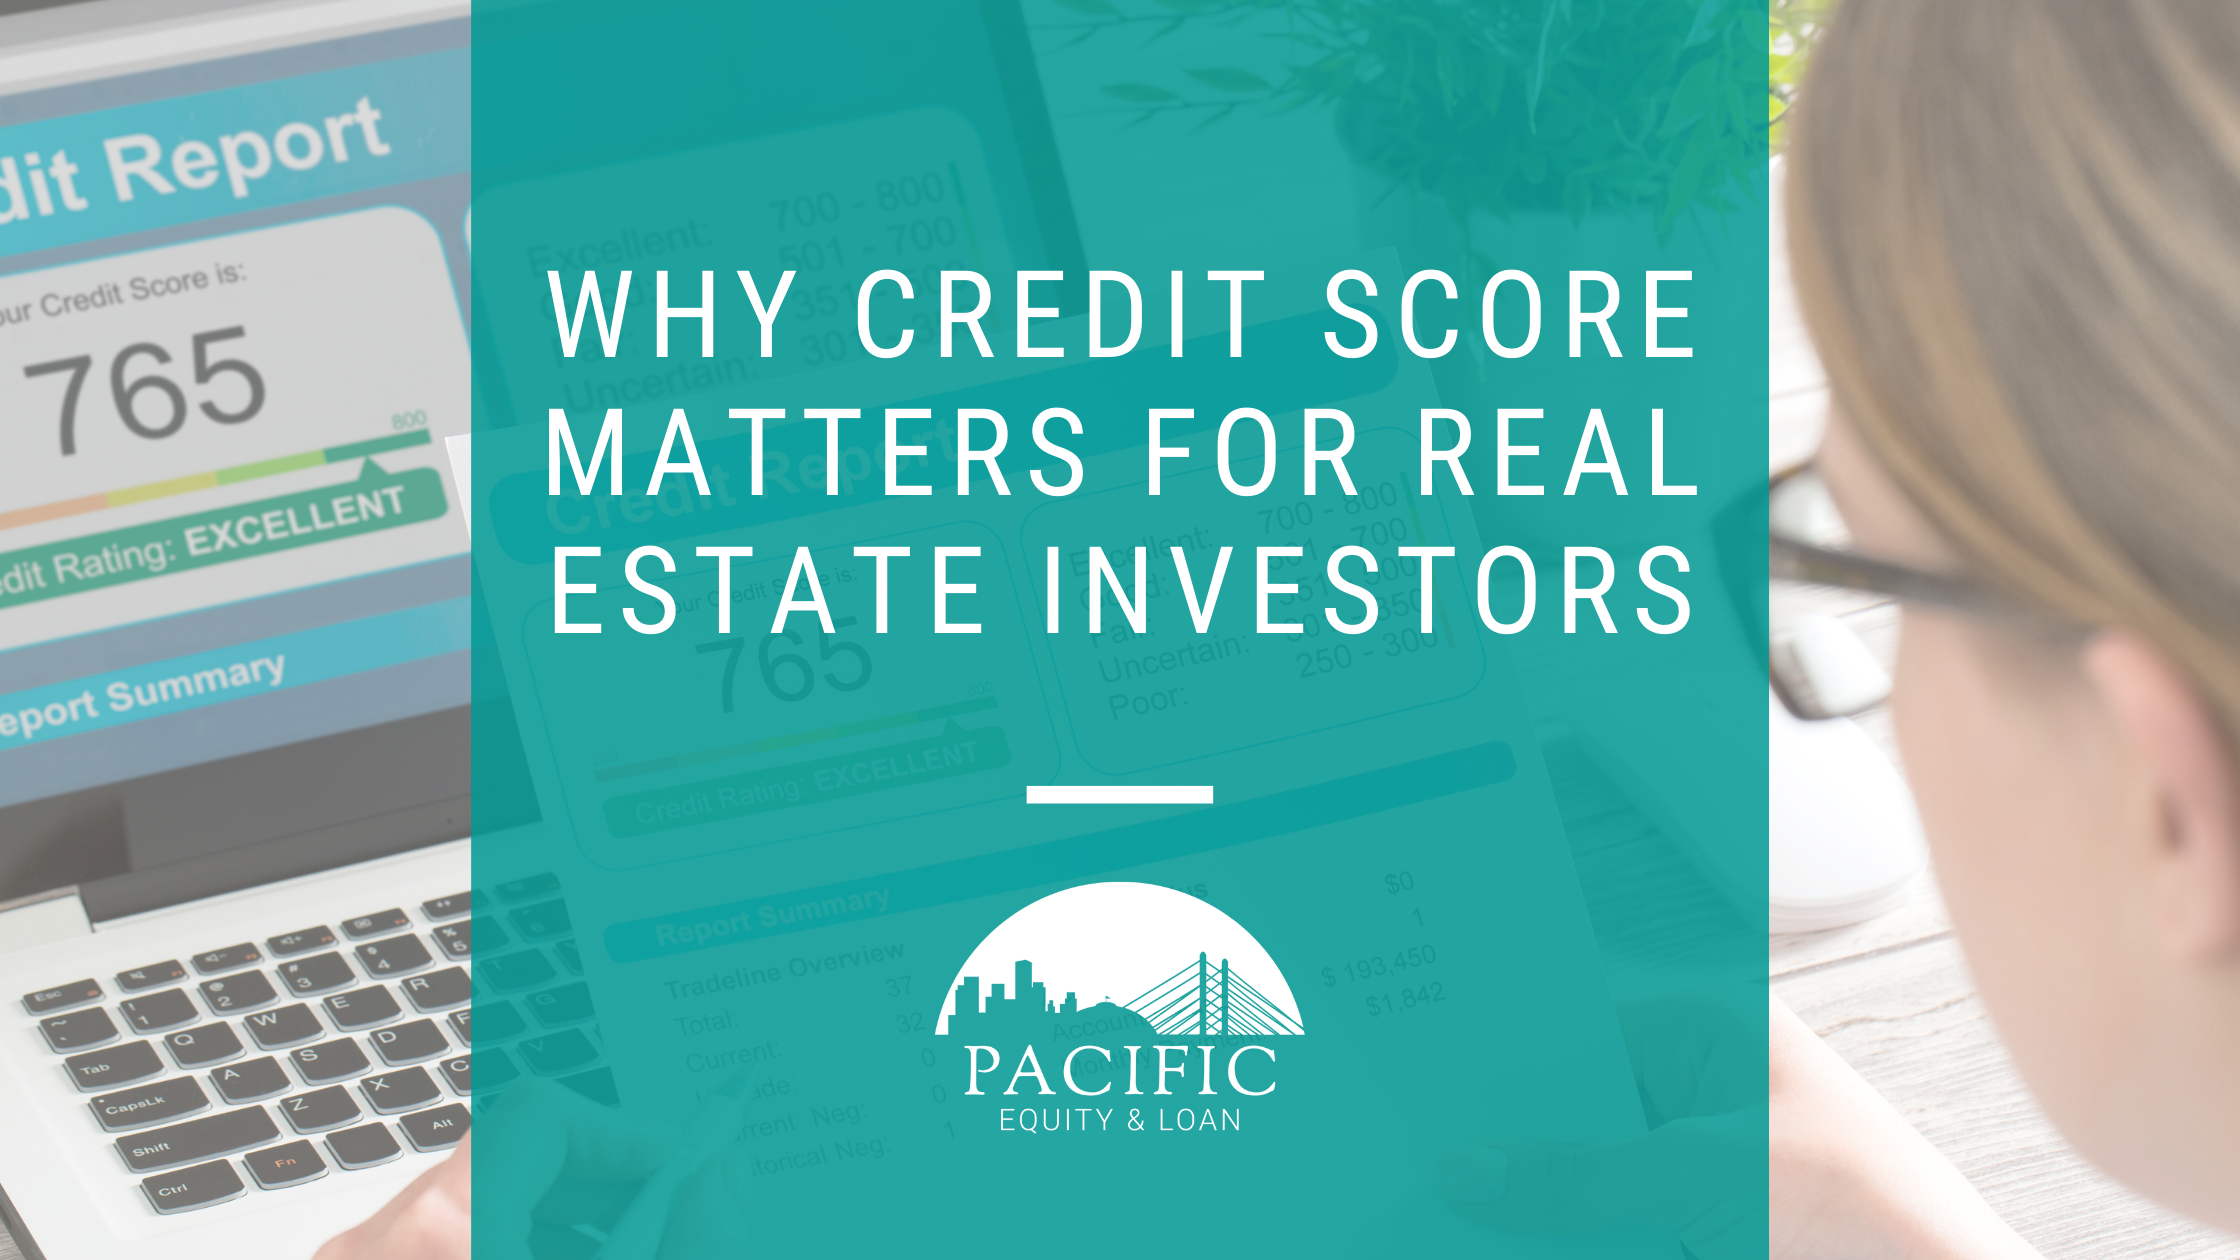 Why Credit Scores Matter for Real Estate Investors